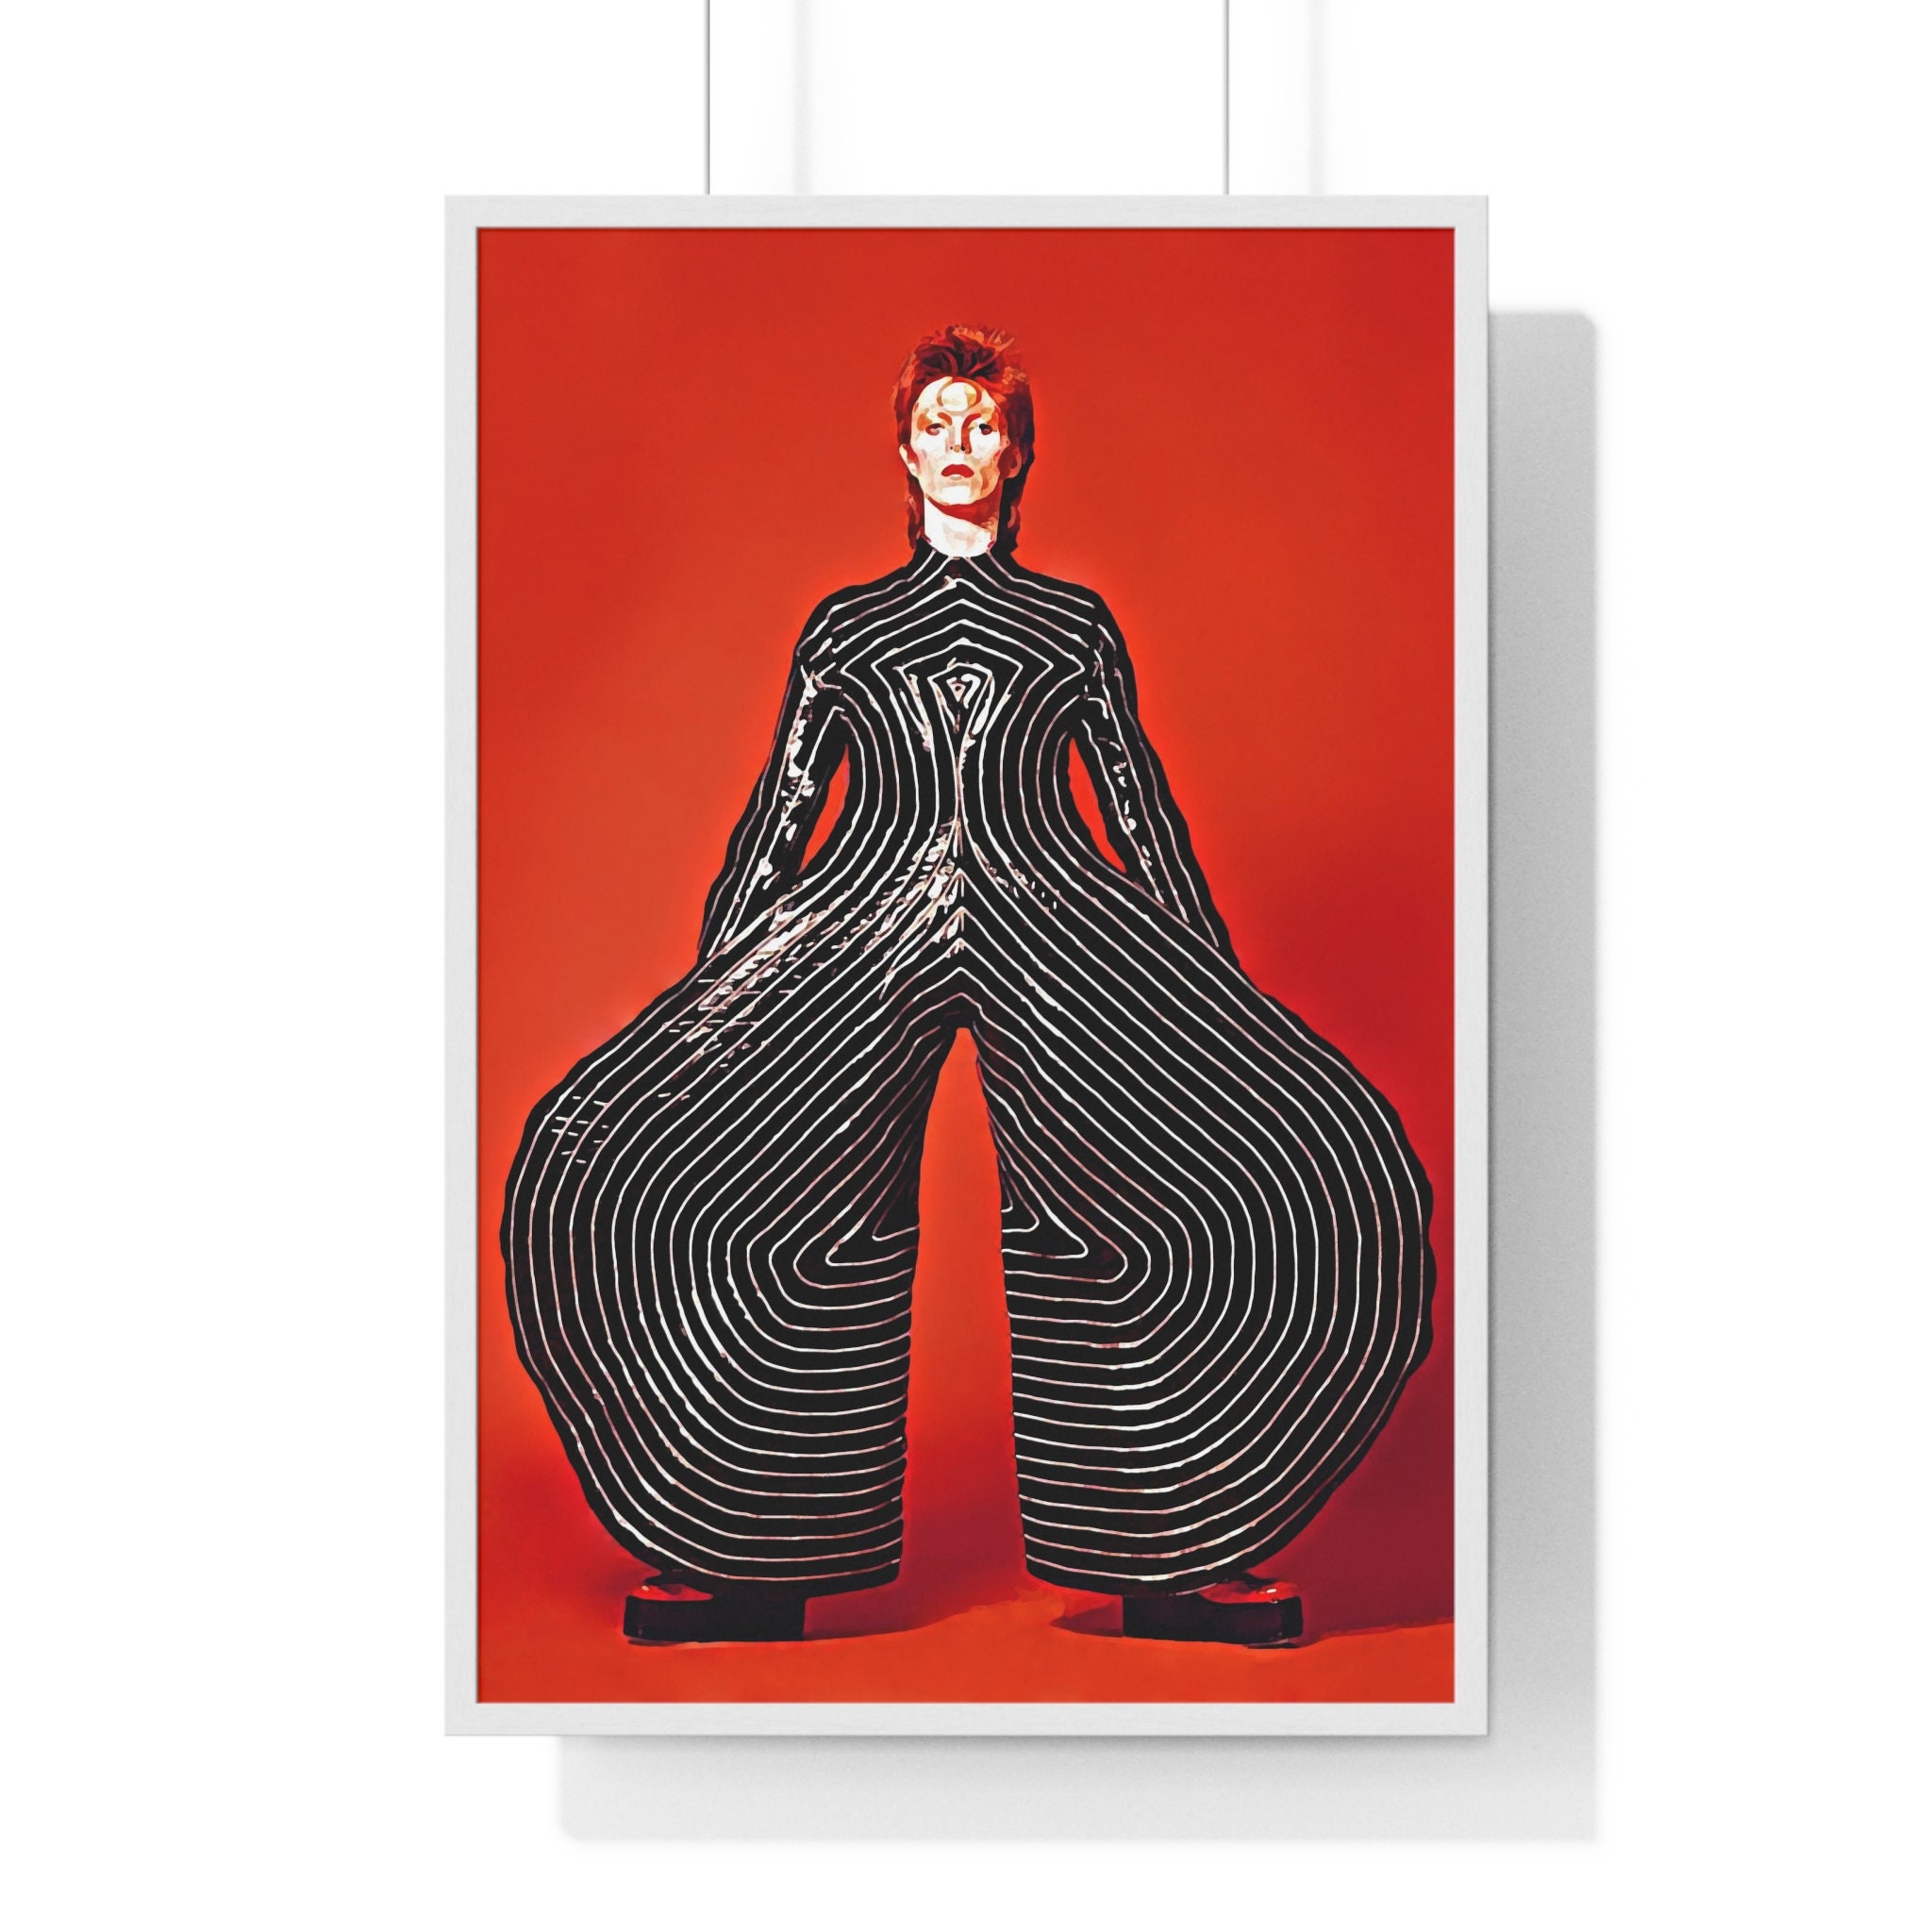 David Bowie Ziggy Stardust Lightning Bolt Catsuit Jumpsuit Stage Costume,  by LENA QUIST 